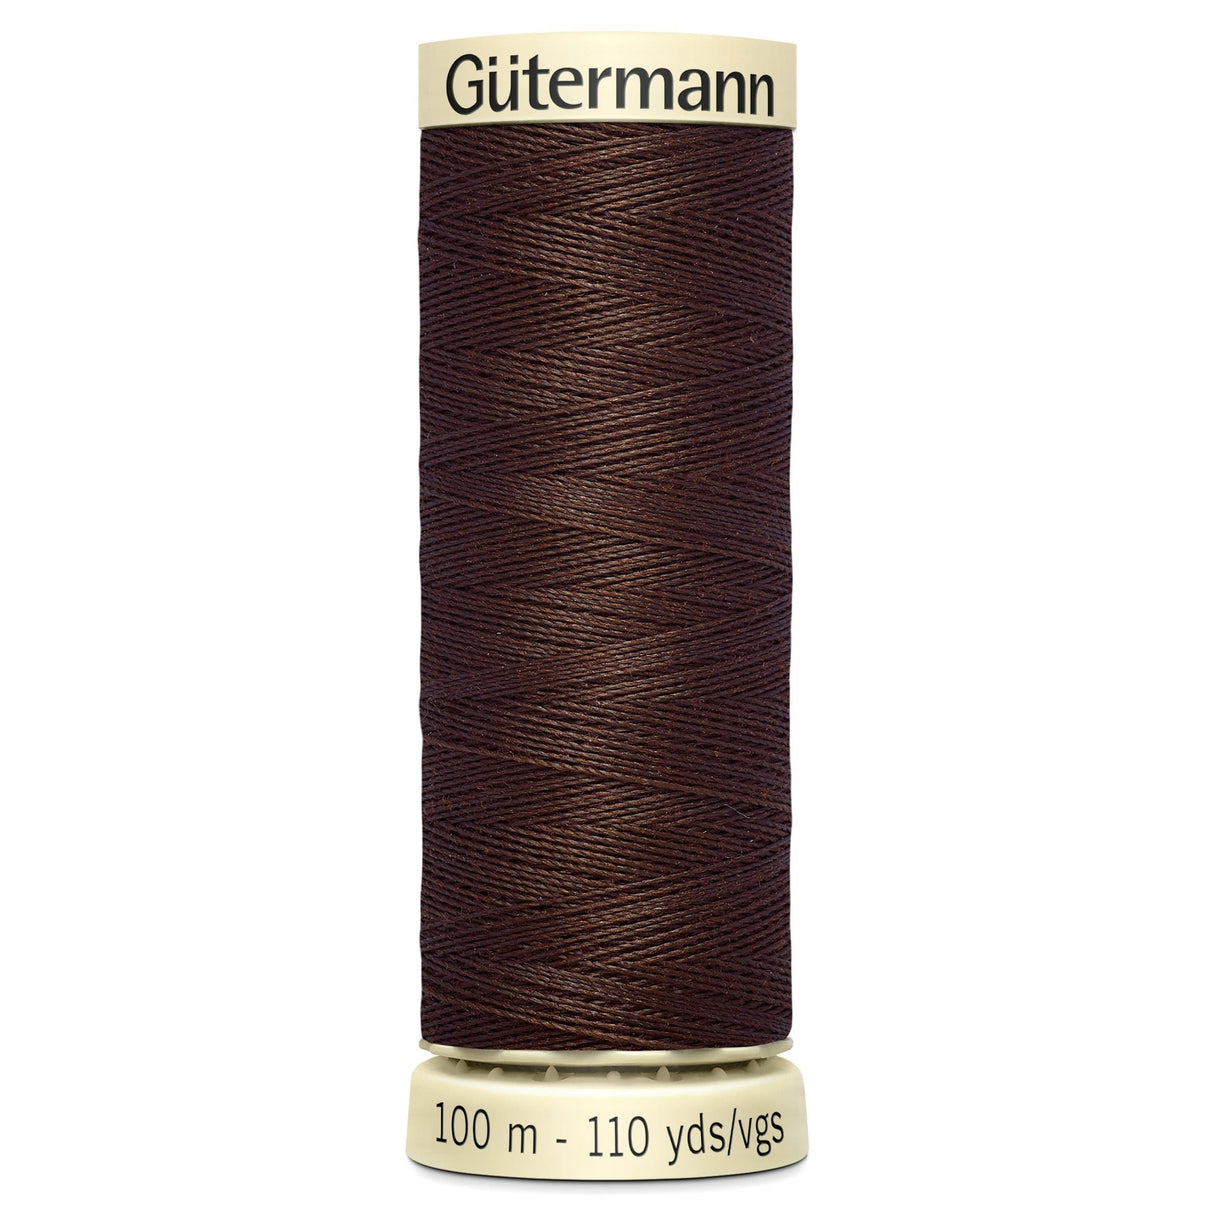 Groves Haberdashery 694 Gutermann Thread Sewing Cotton 100 m Black to Pink